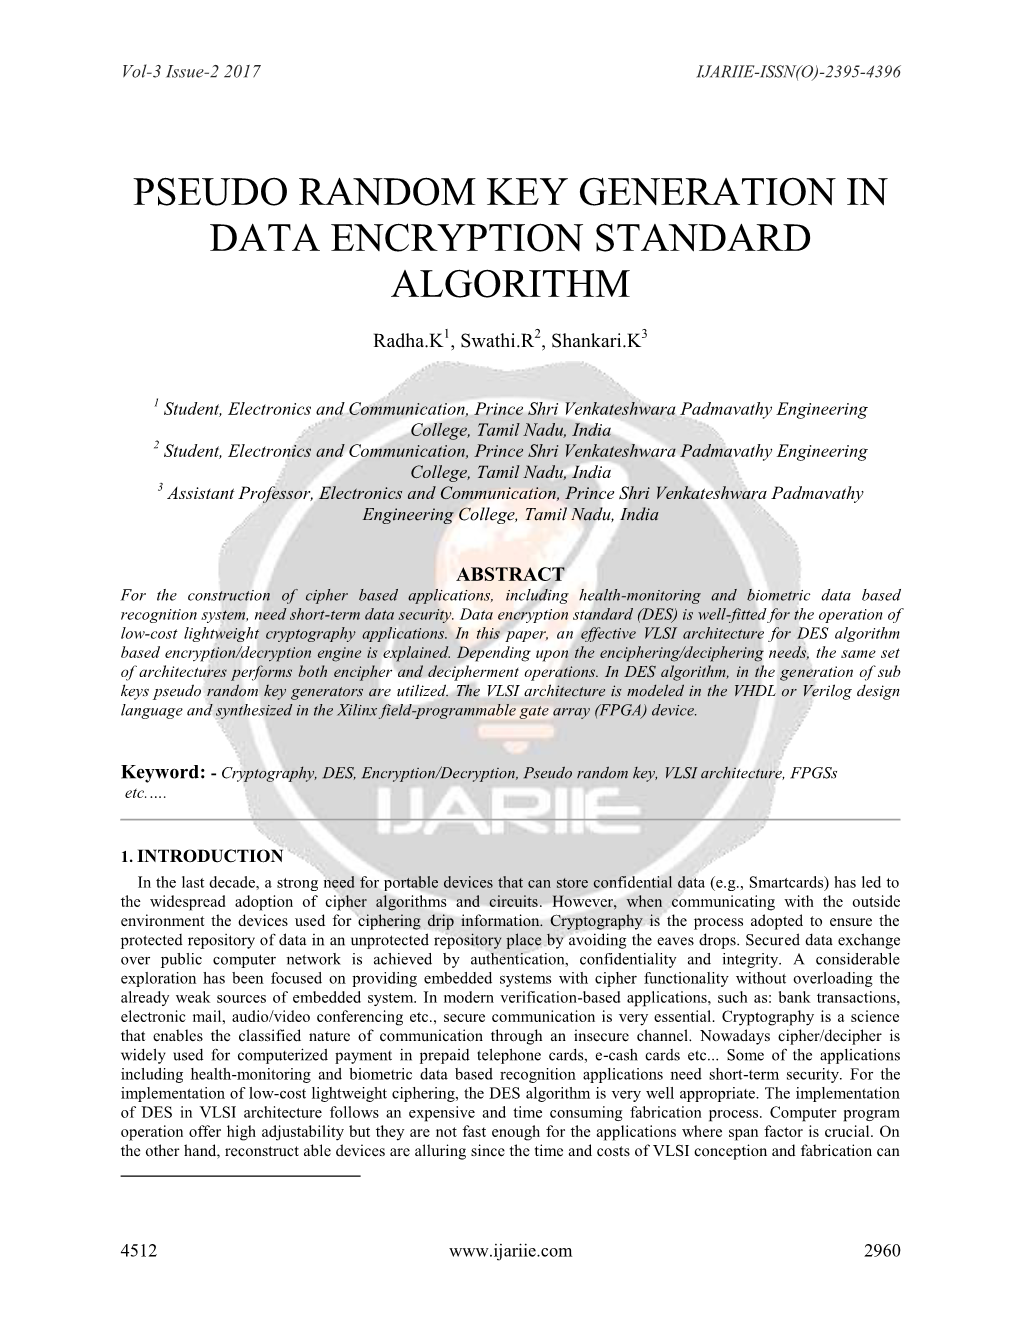 Pseudo Random Key Generation in Data Encryption Standard Algorithm